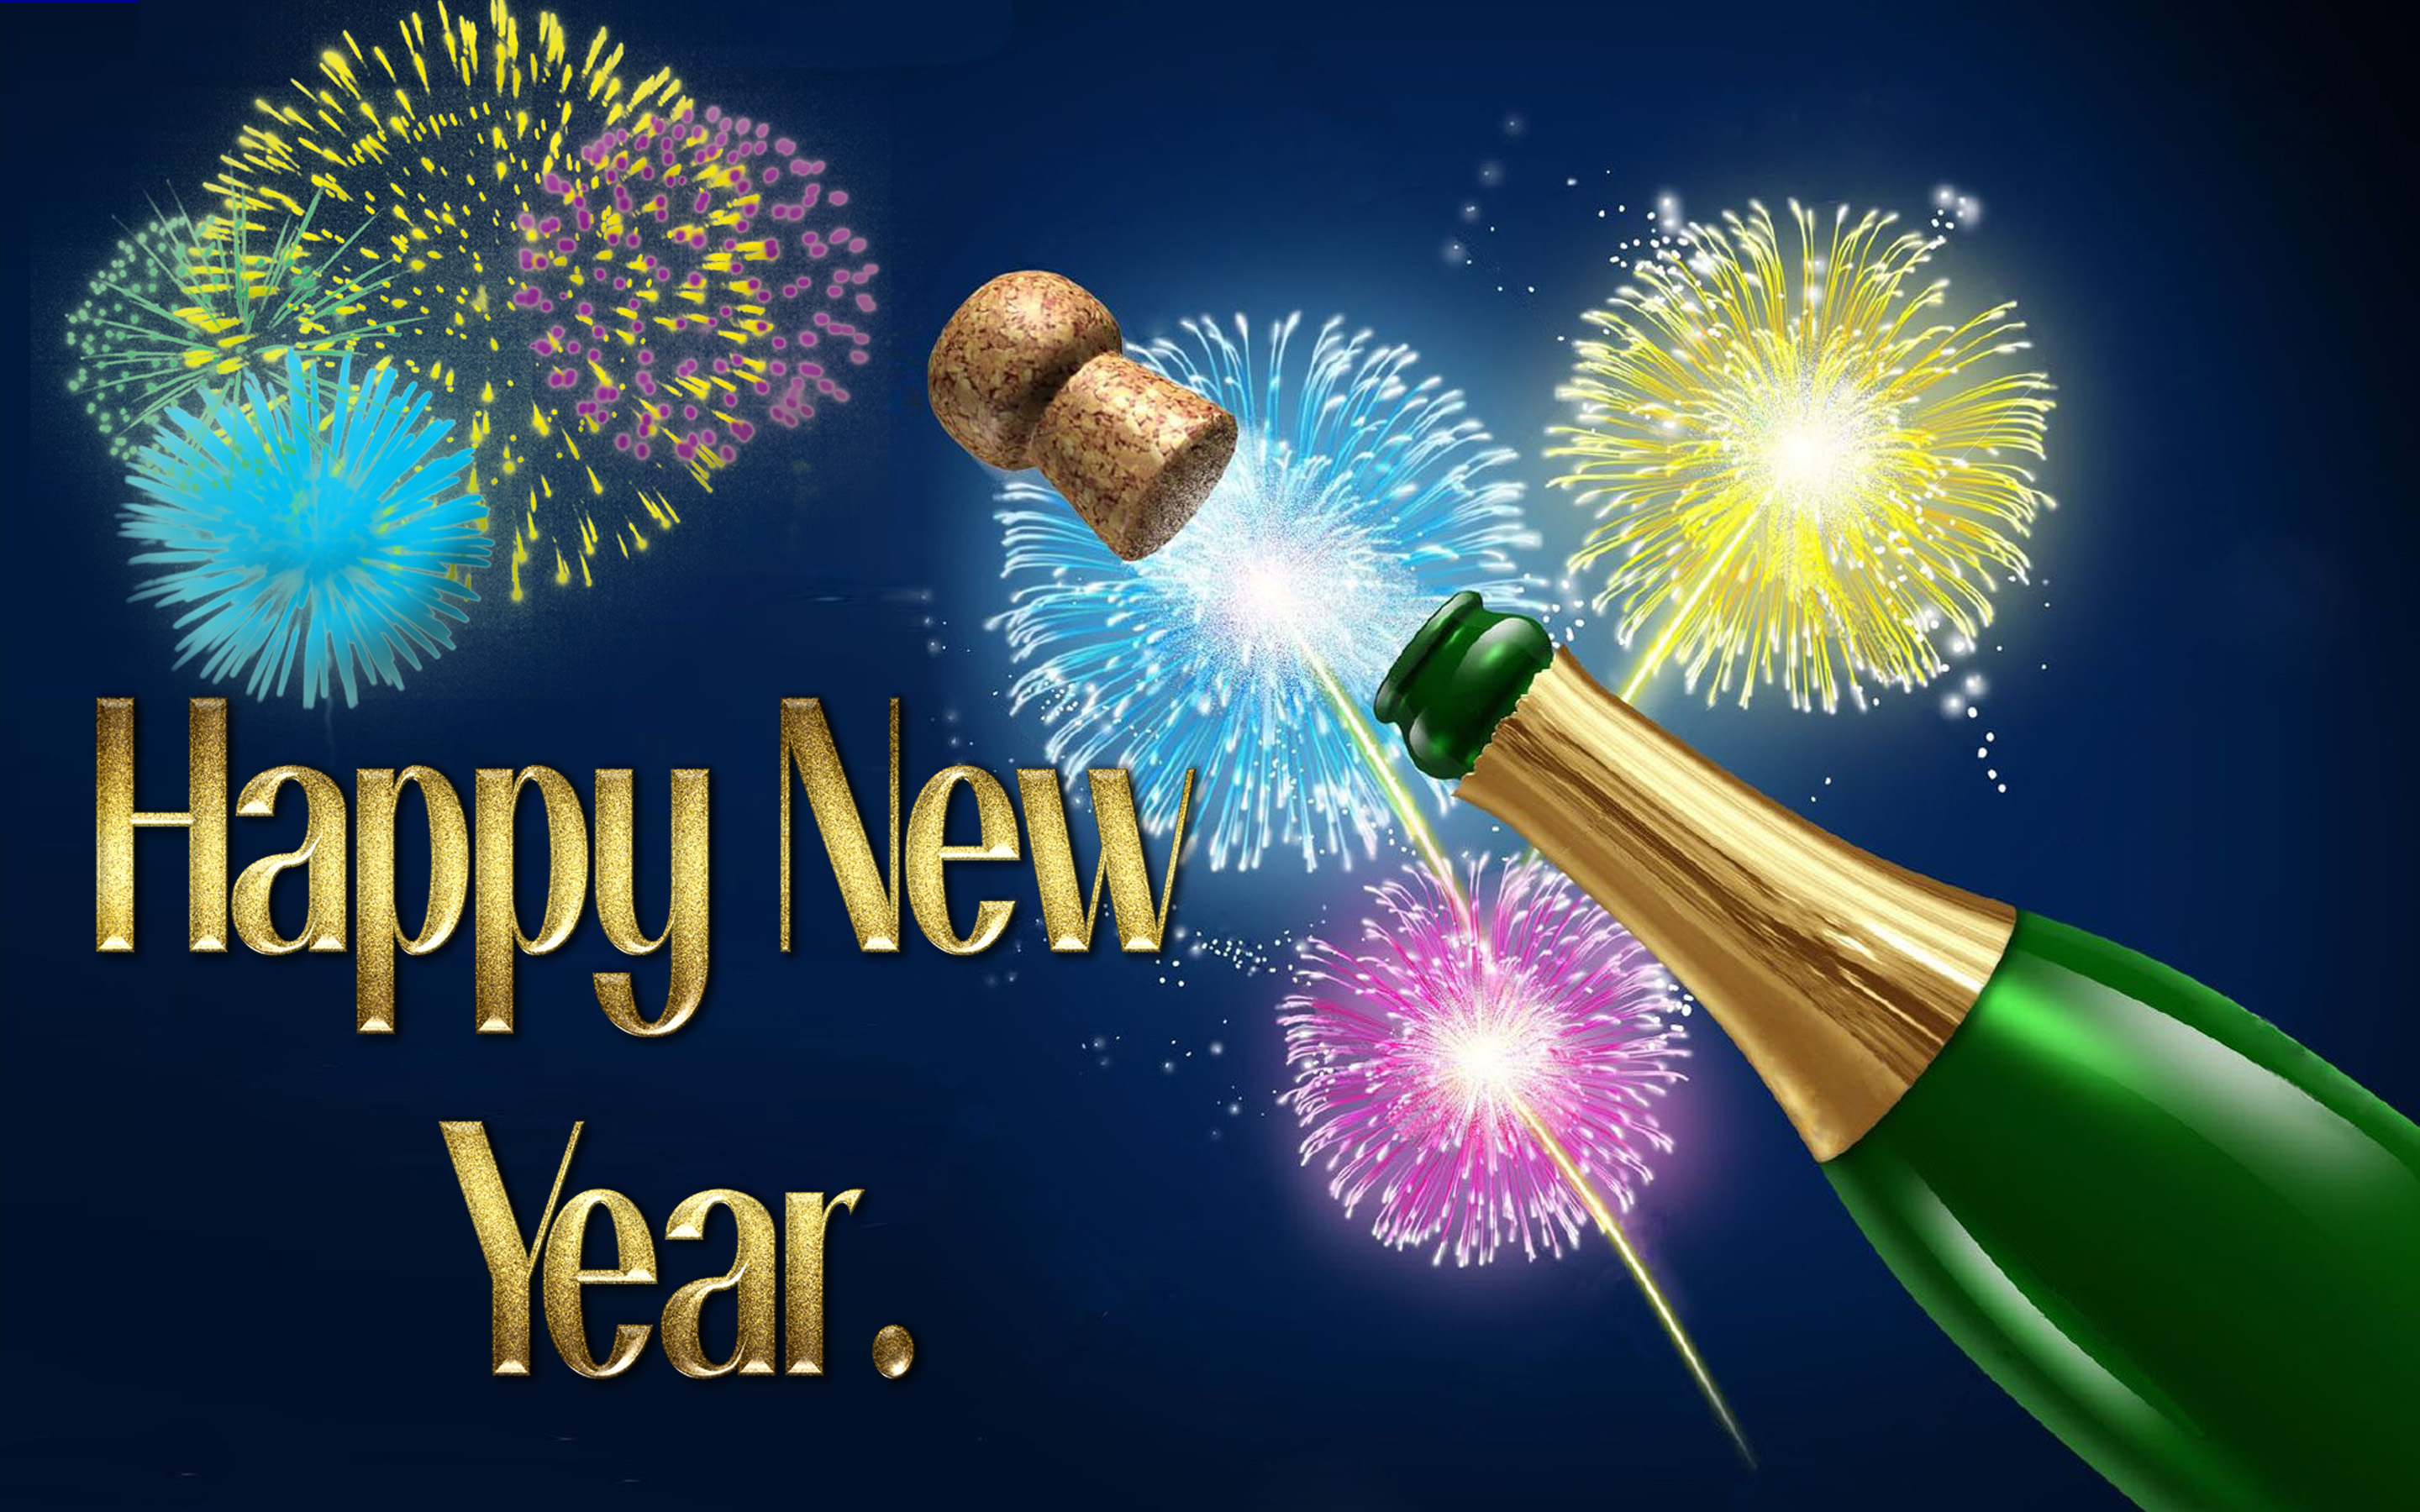 New years festival. Шампанское фейерверк. Happy New year картинки. Фейерверк с шампанским. Happy New year обои на рабочий стол.